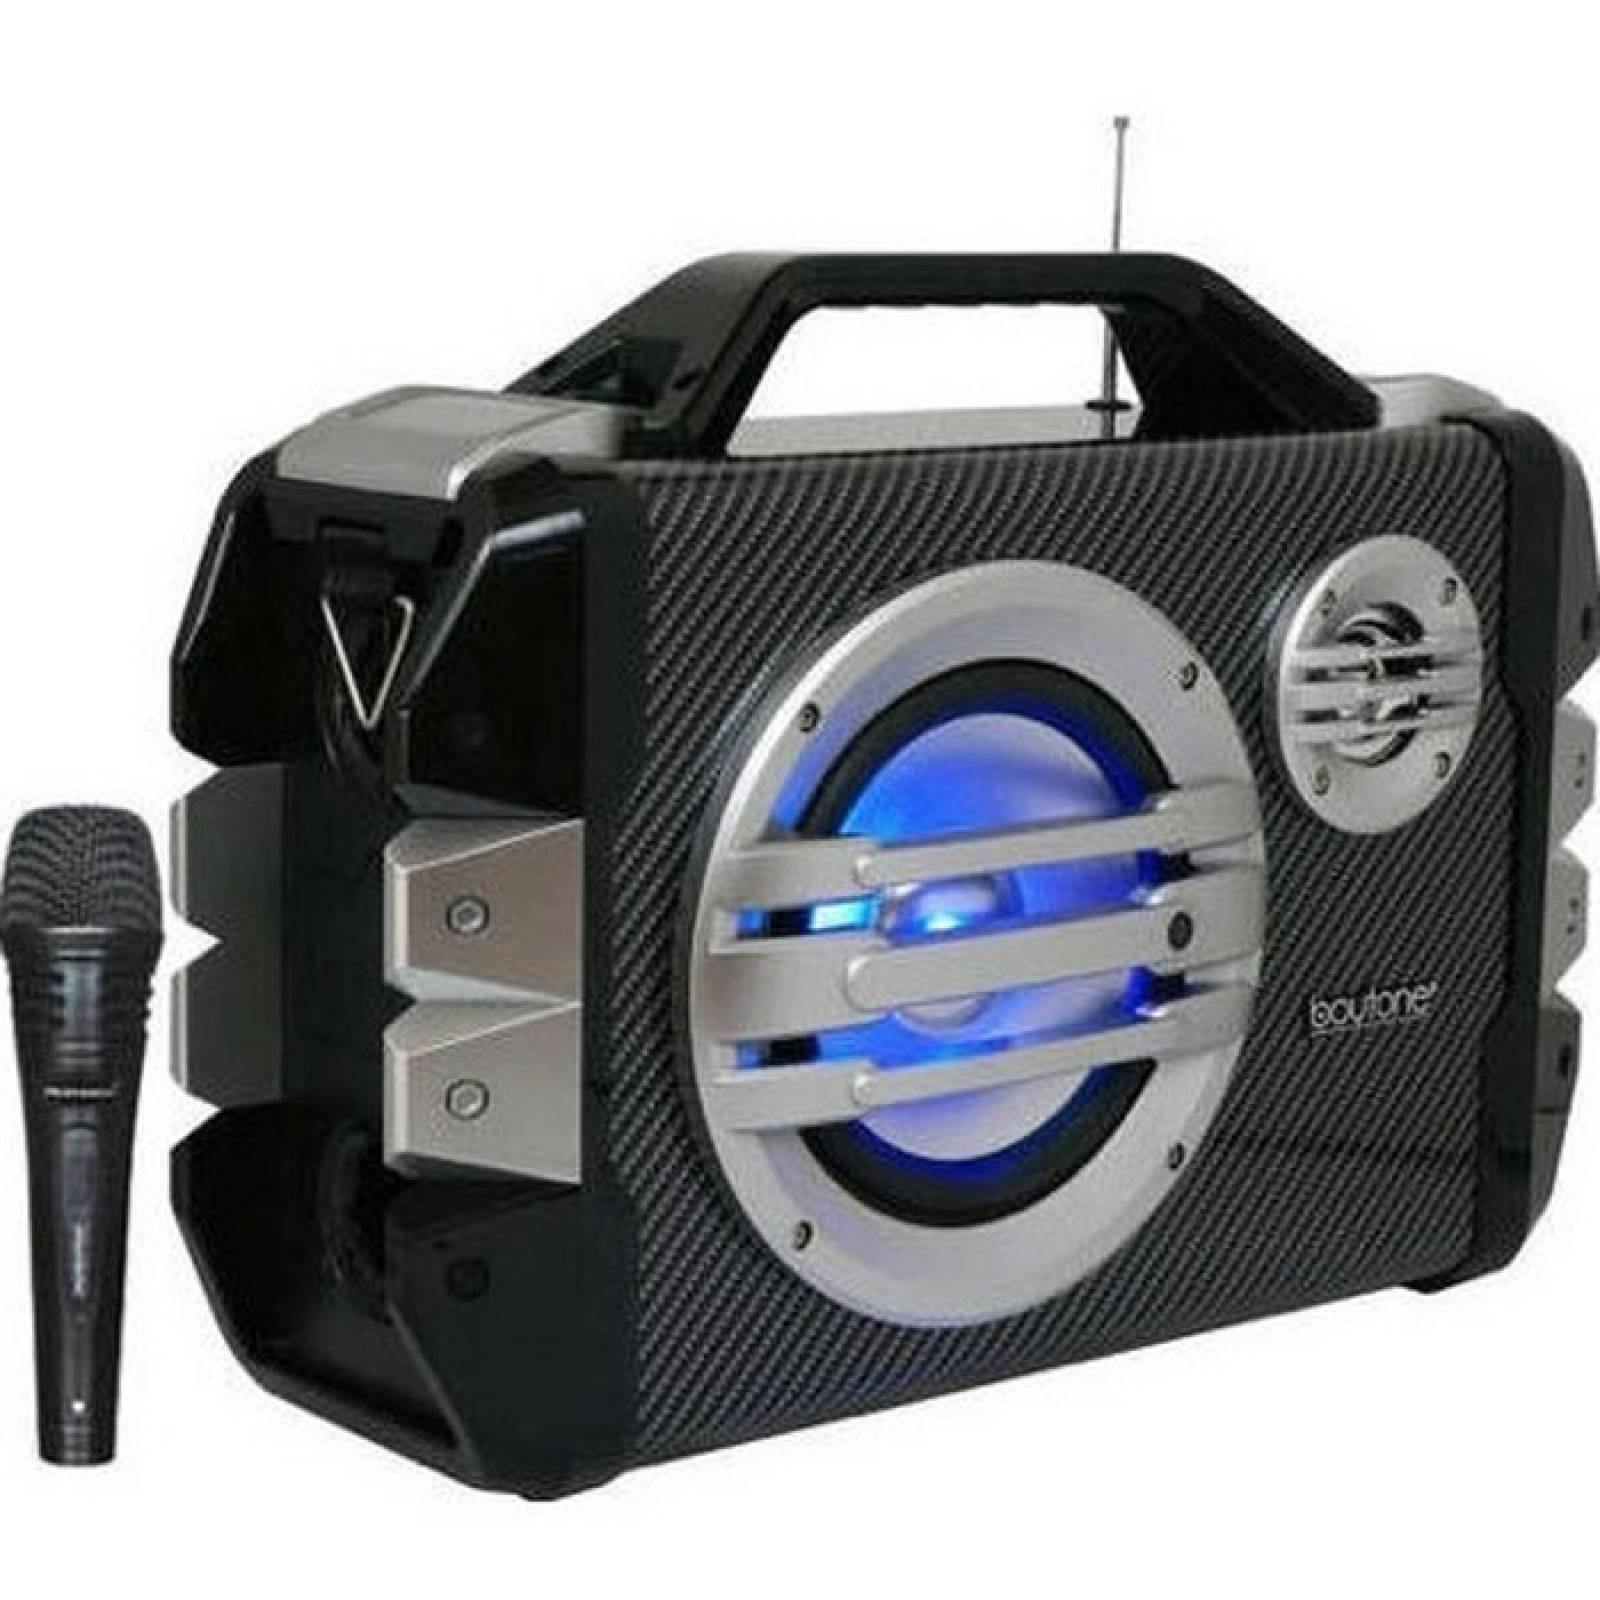 Boytone 51Series Audio porttil Karaoke Bluetooth Sistema de altavoces con micrfono